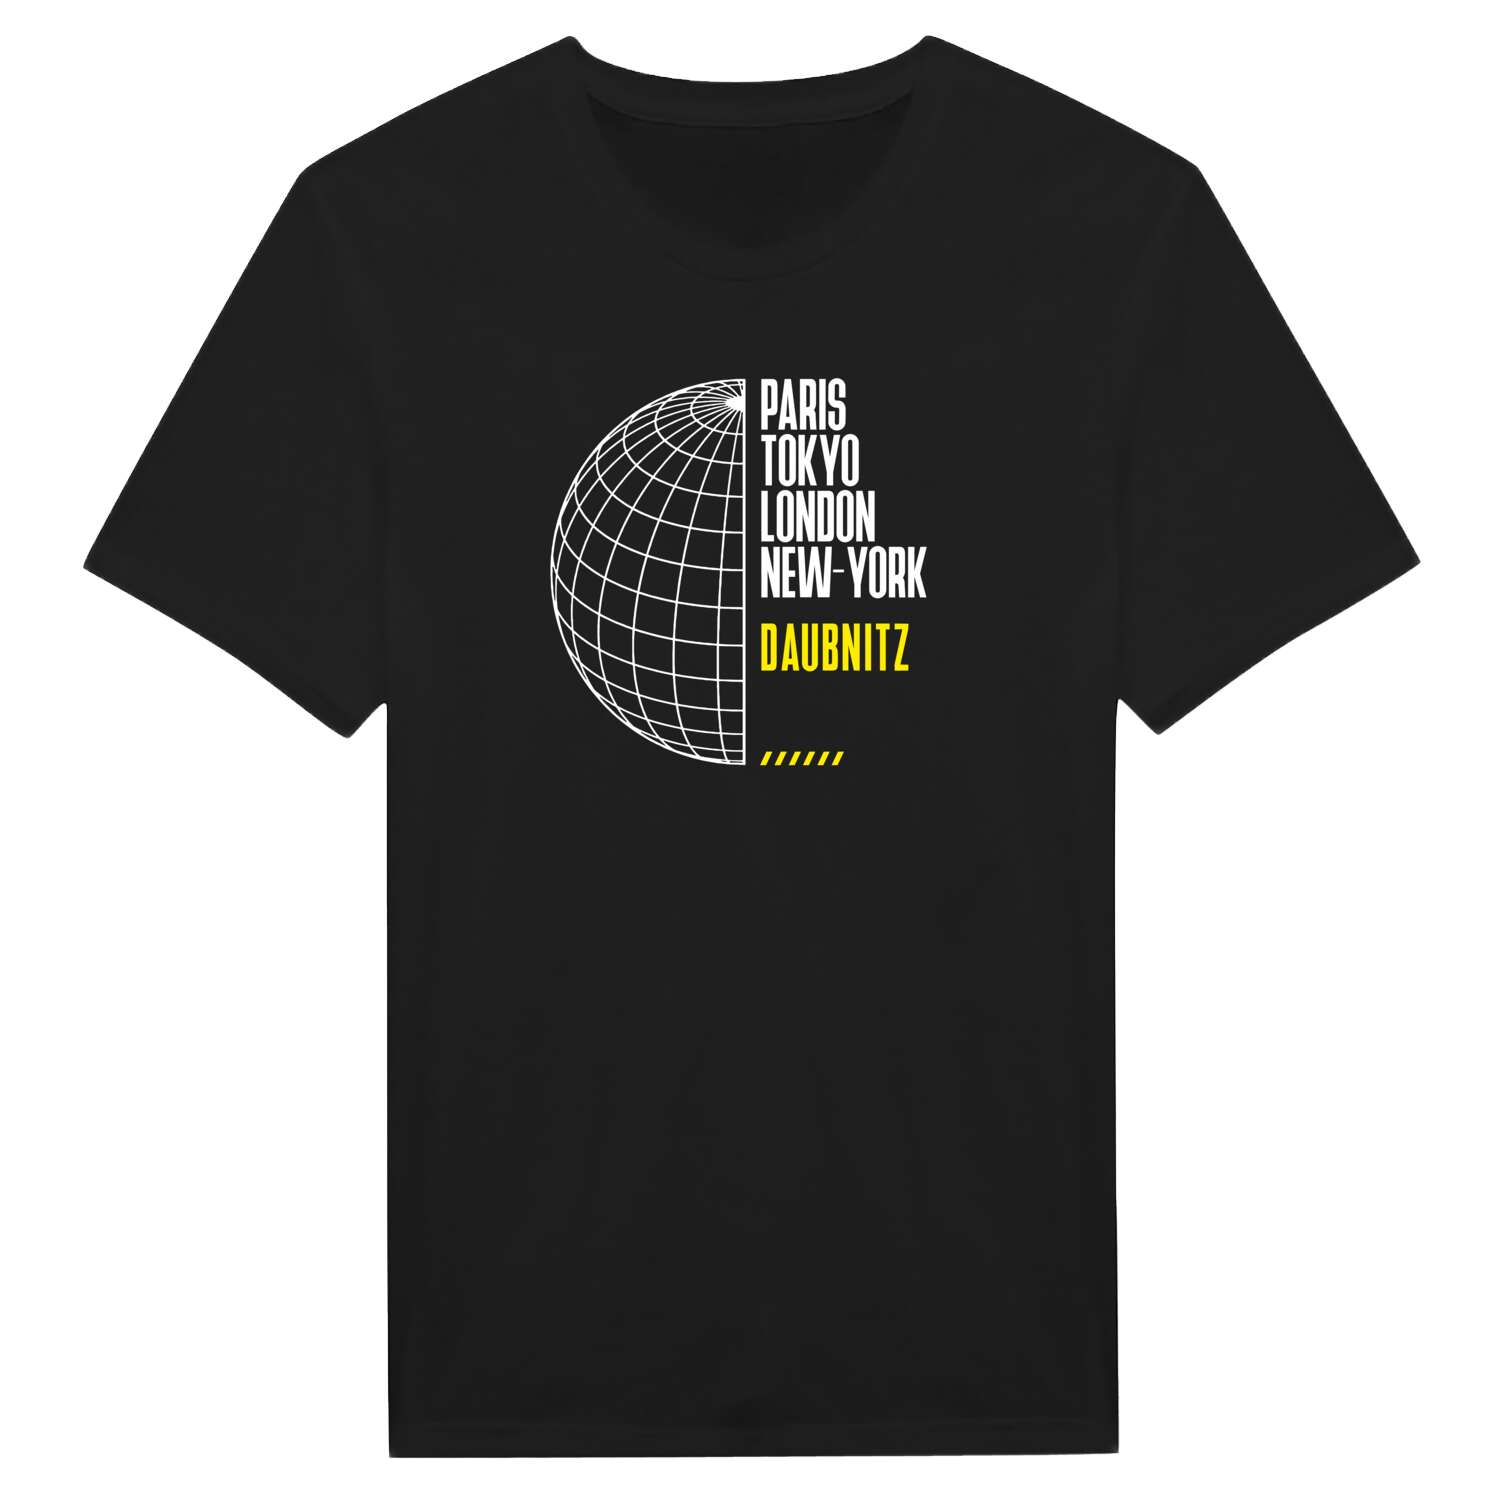 Daubnitz T-Shirt »Paris Tokyo London«